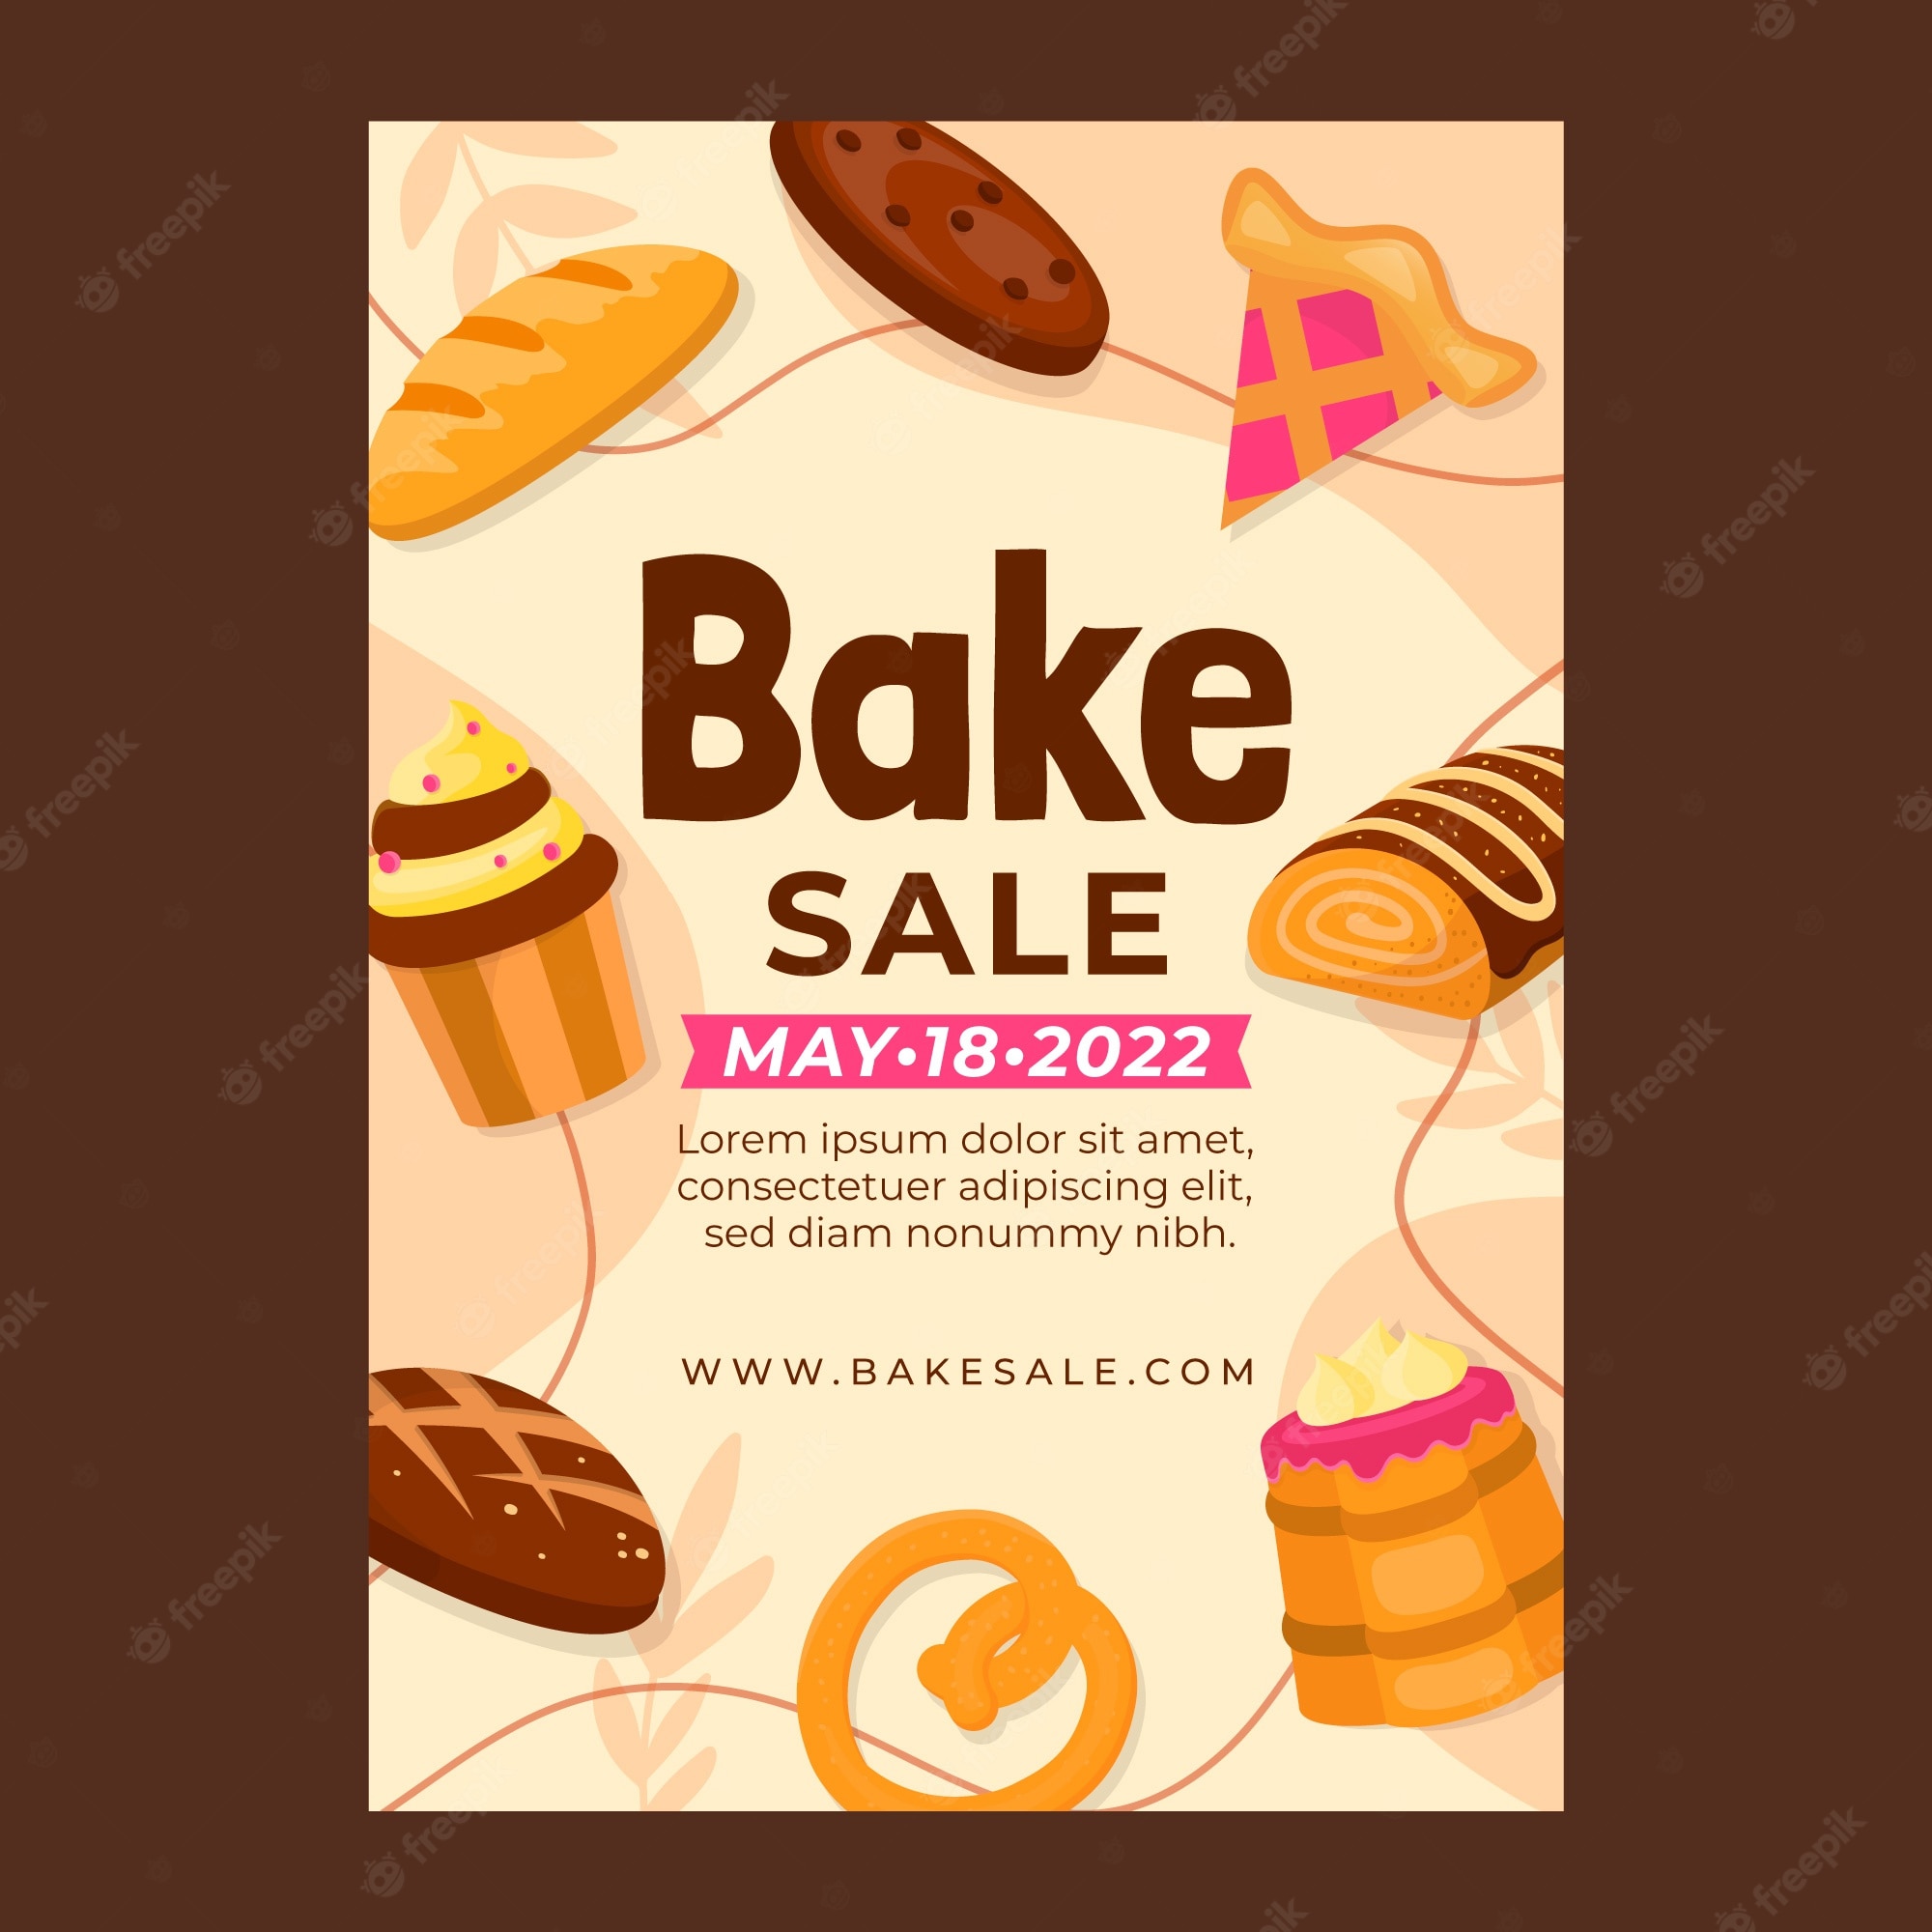 Bake Sale Backgrounds